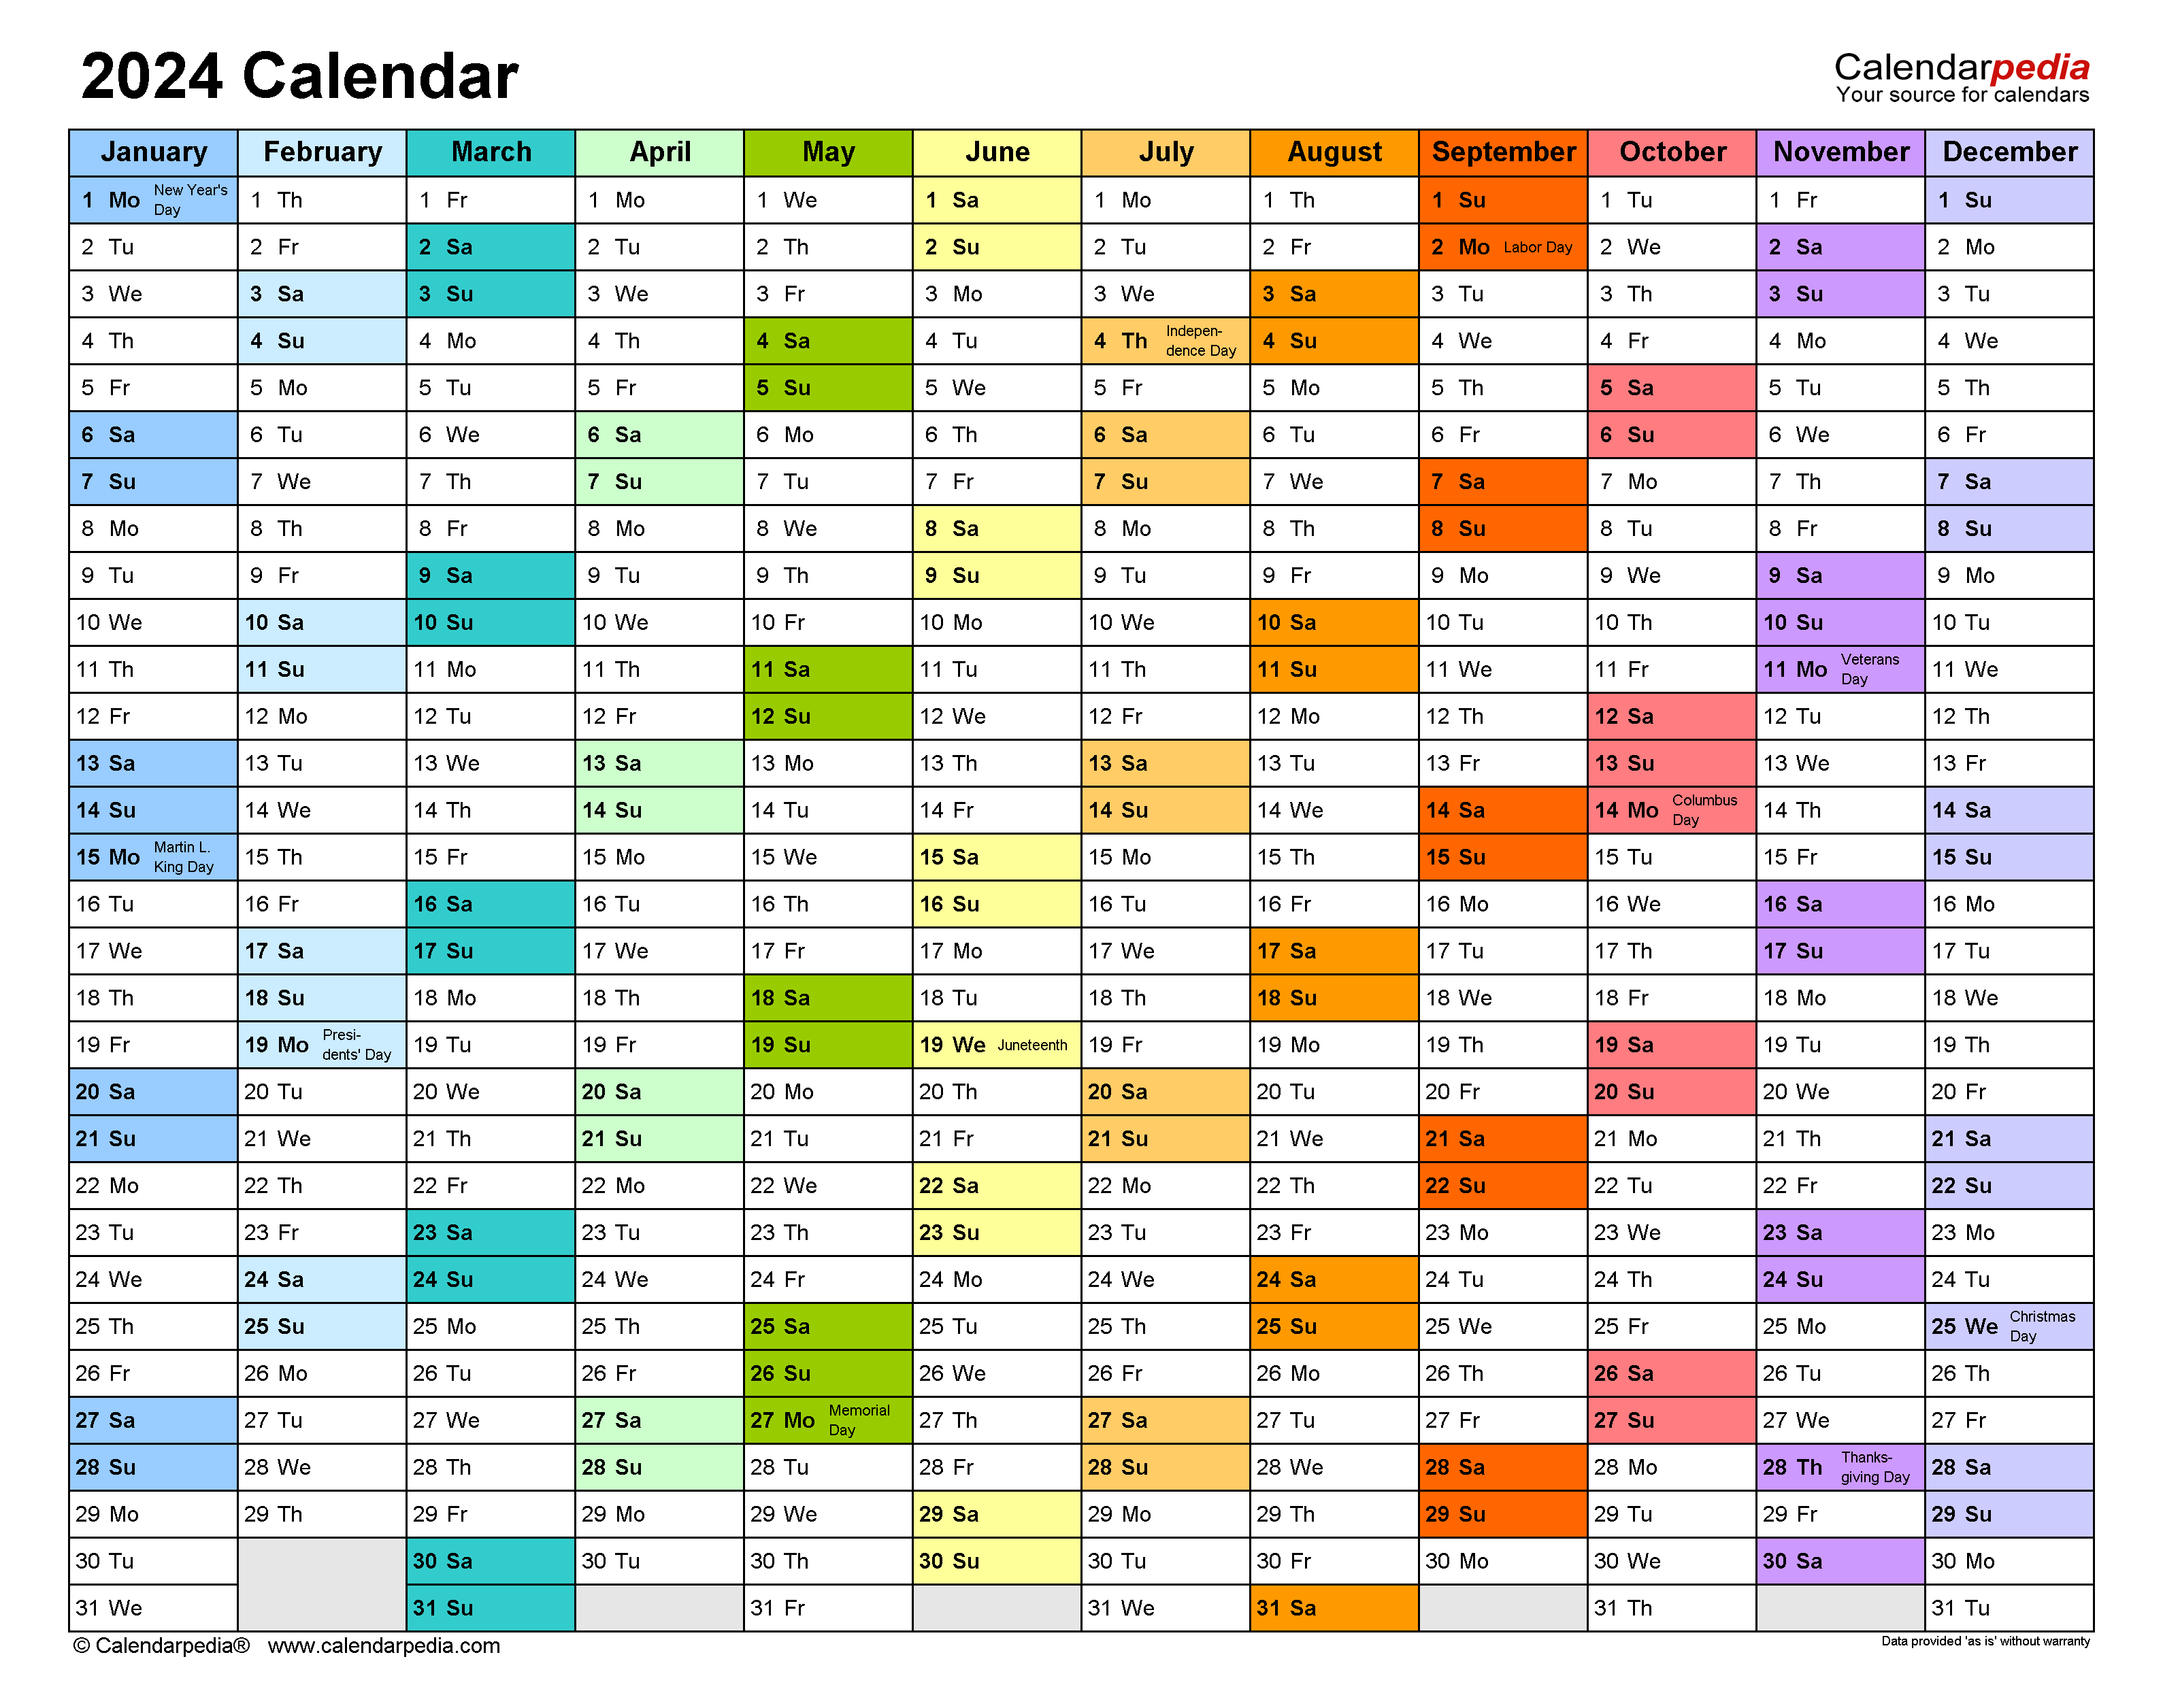 2024 Calendar - Free Printable Word Templates - Calendarpedia for 2024 Calendar Printable Word Doc